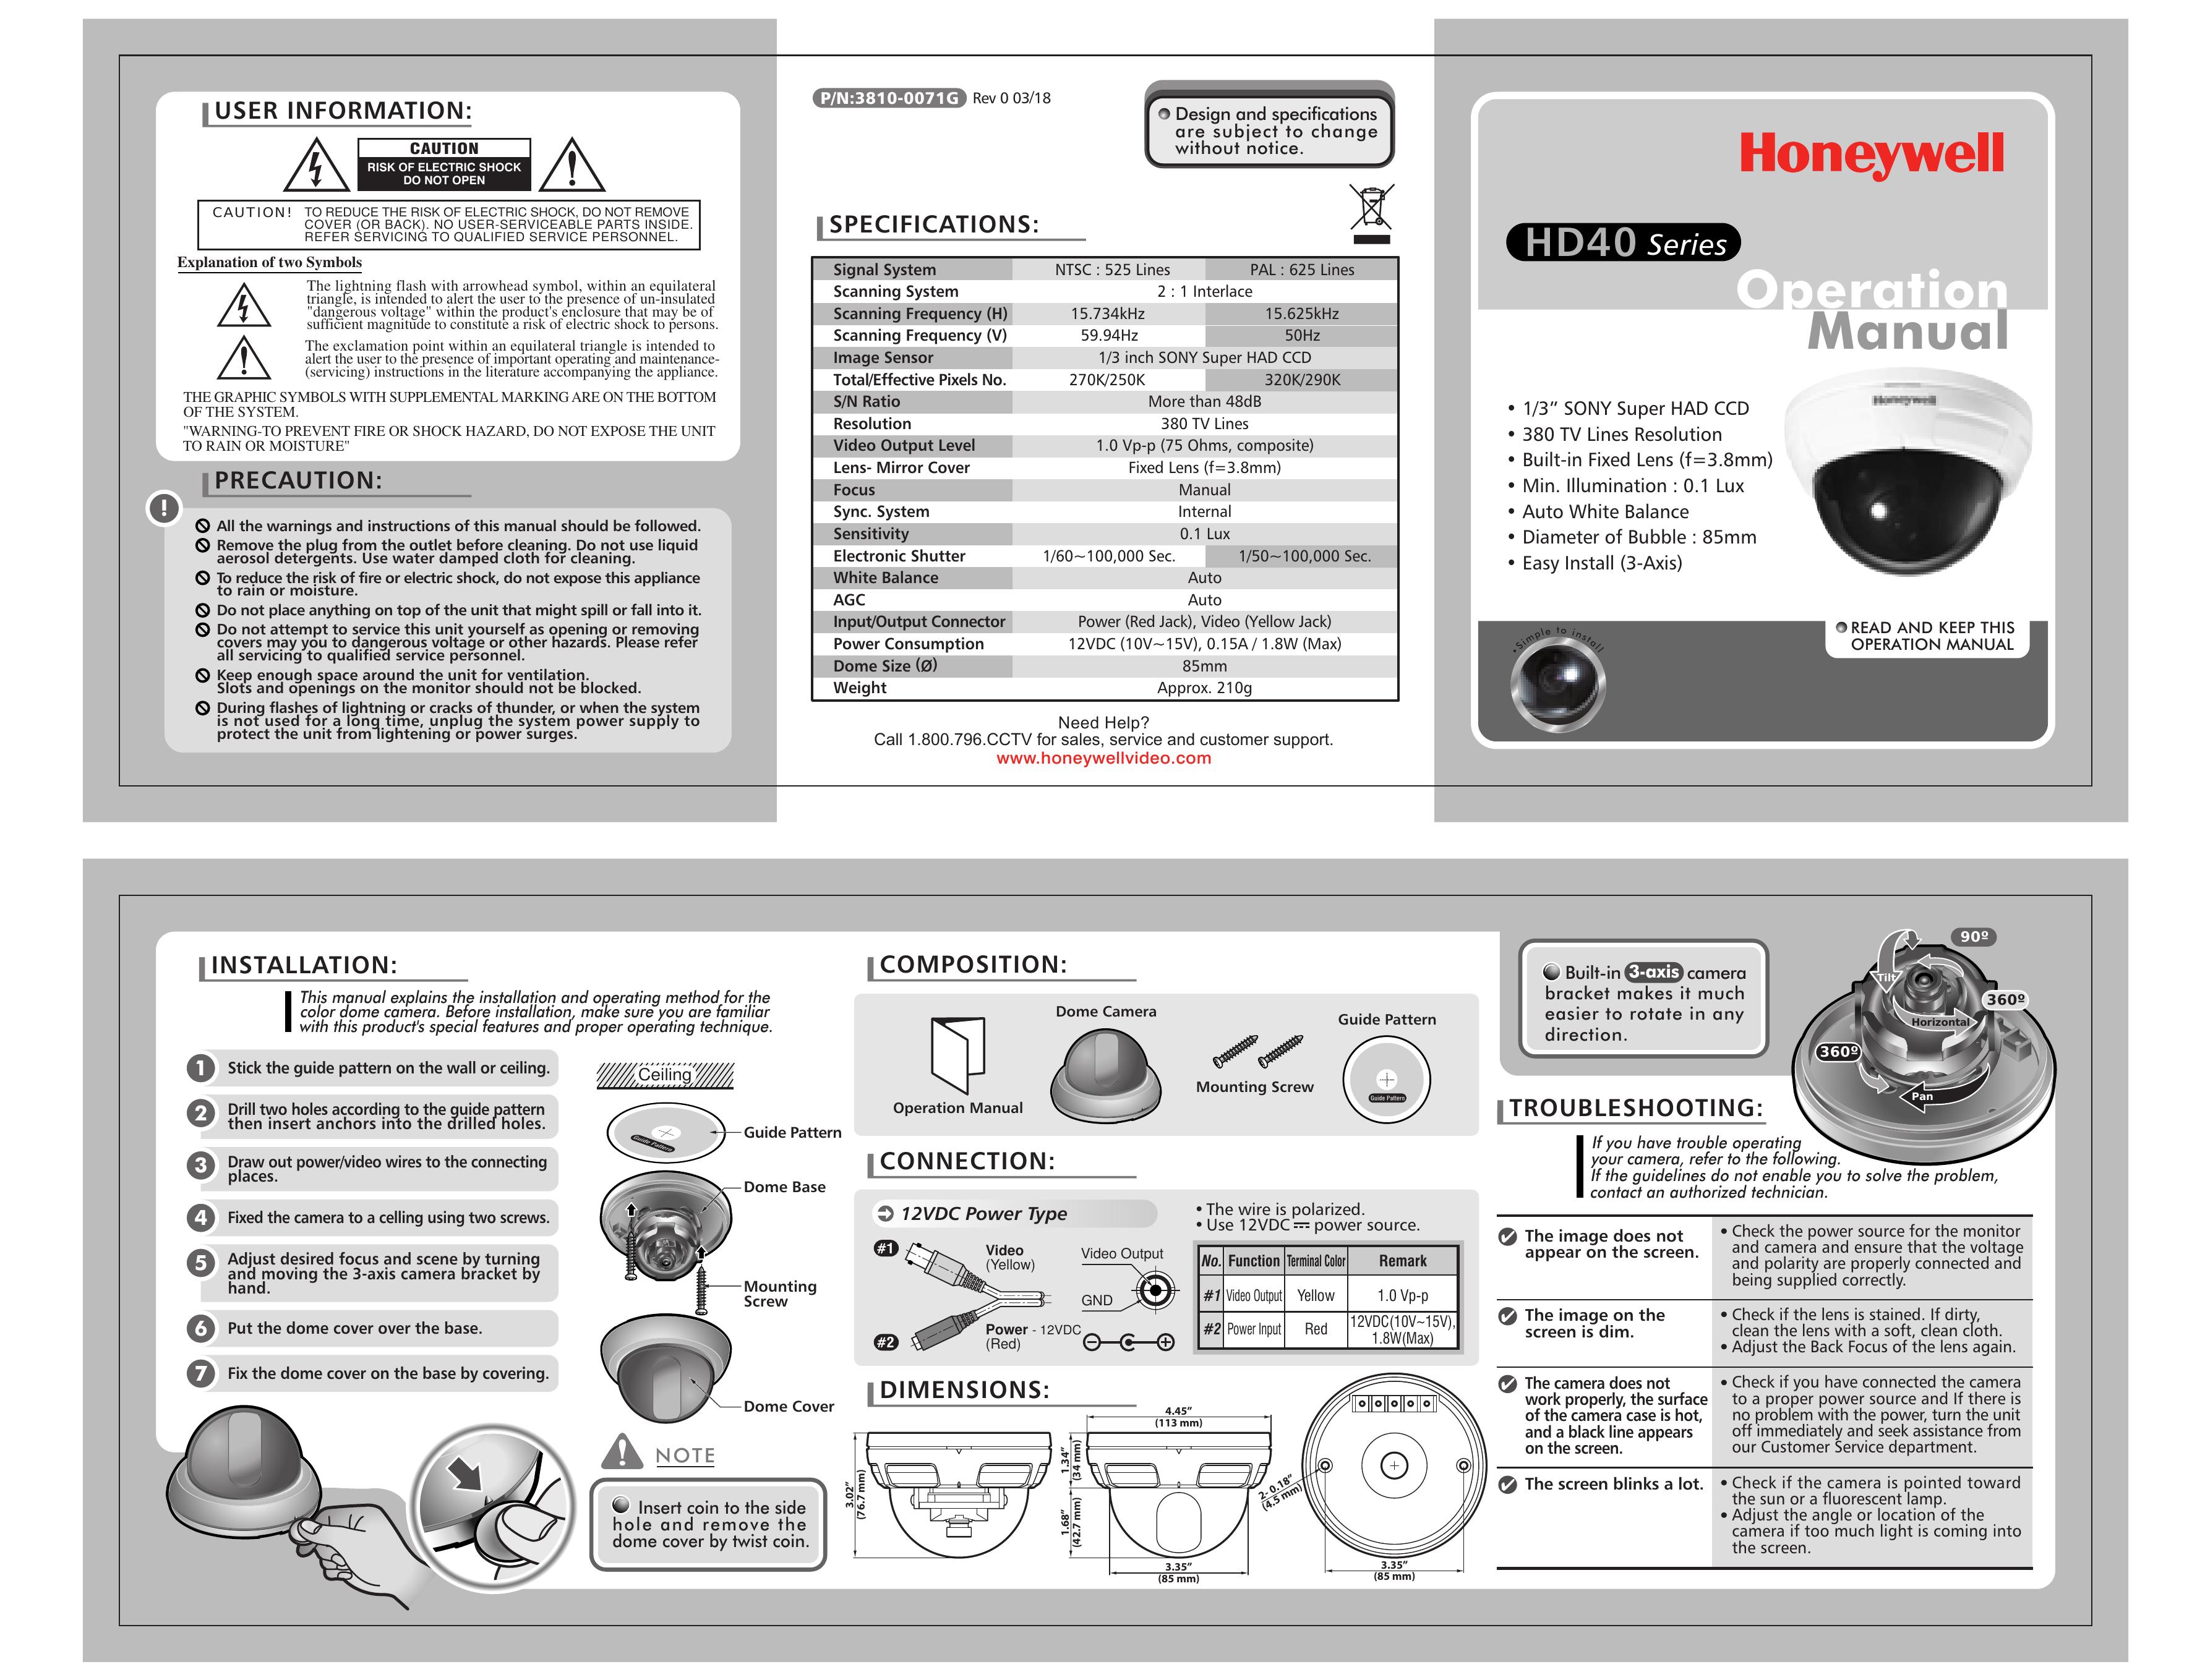 Honeywell HD40 Security Camera User Manual